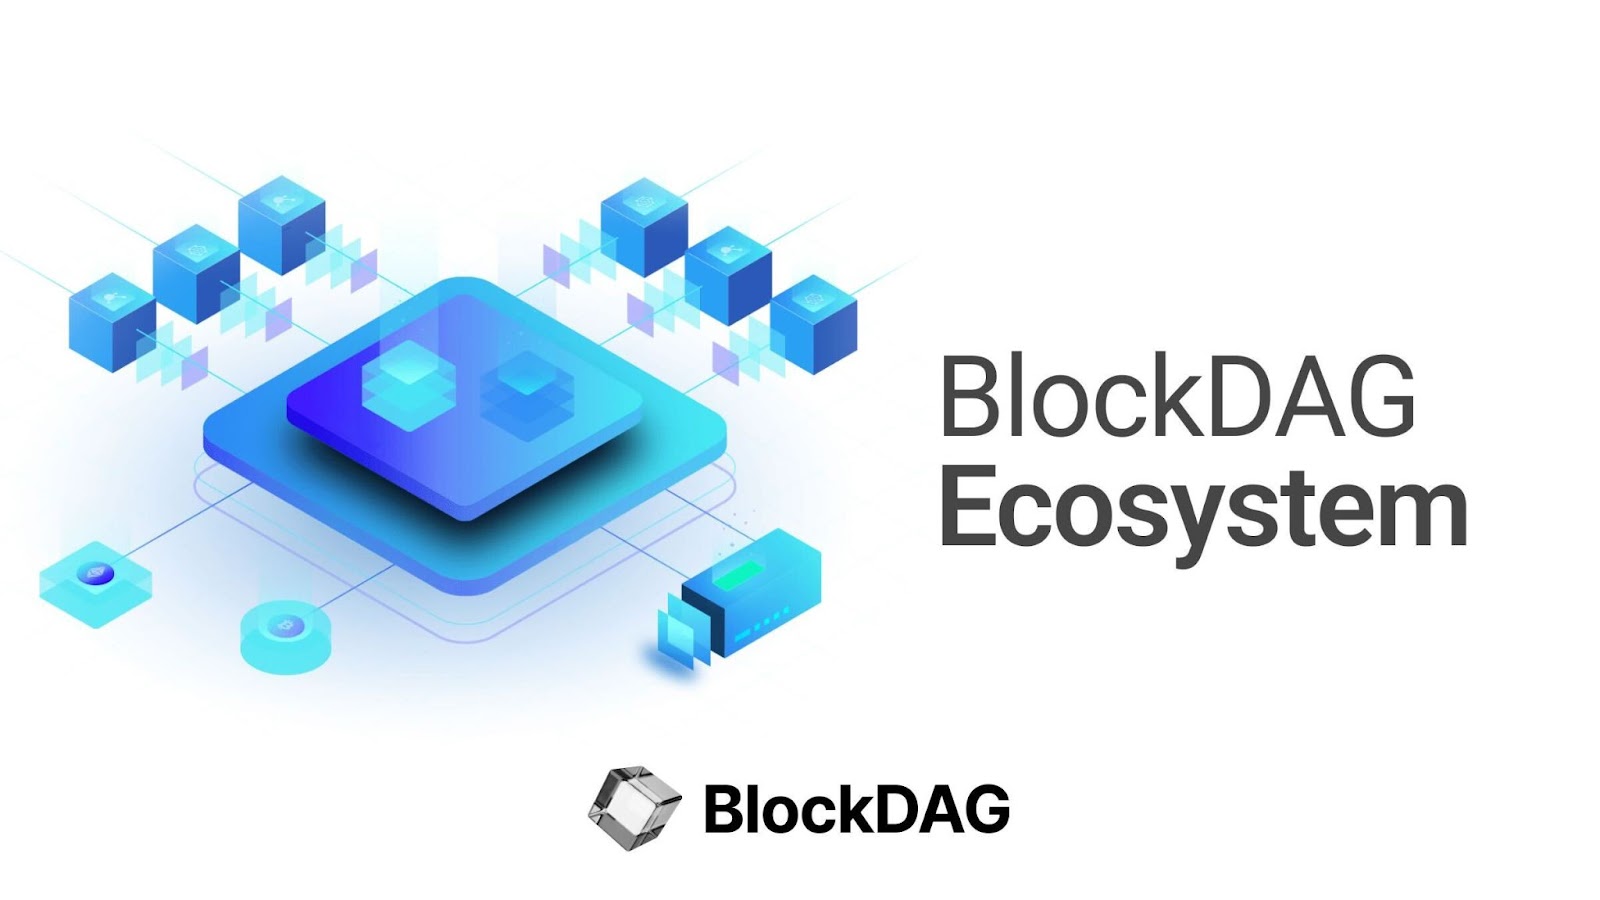 BlockDAG Ecosystem